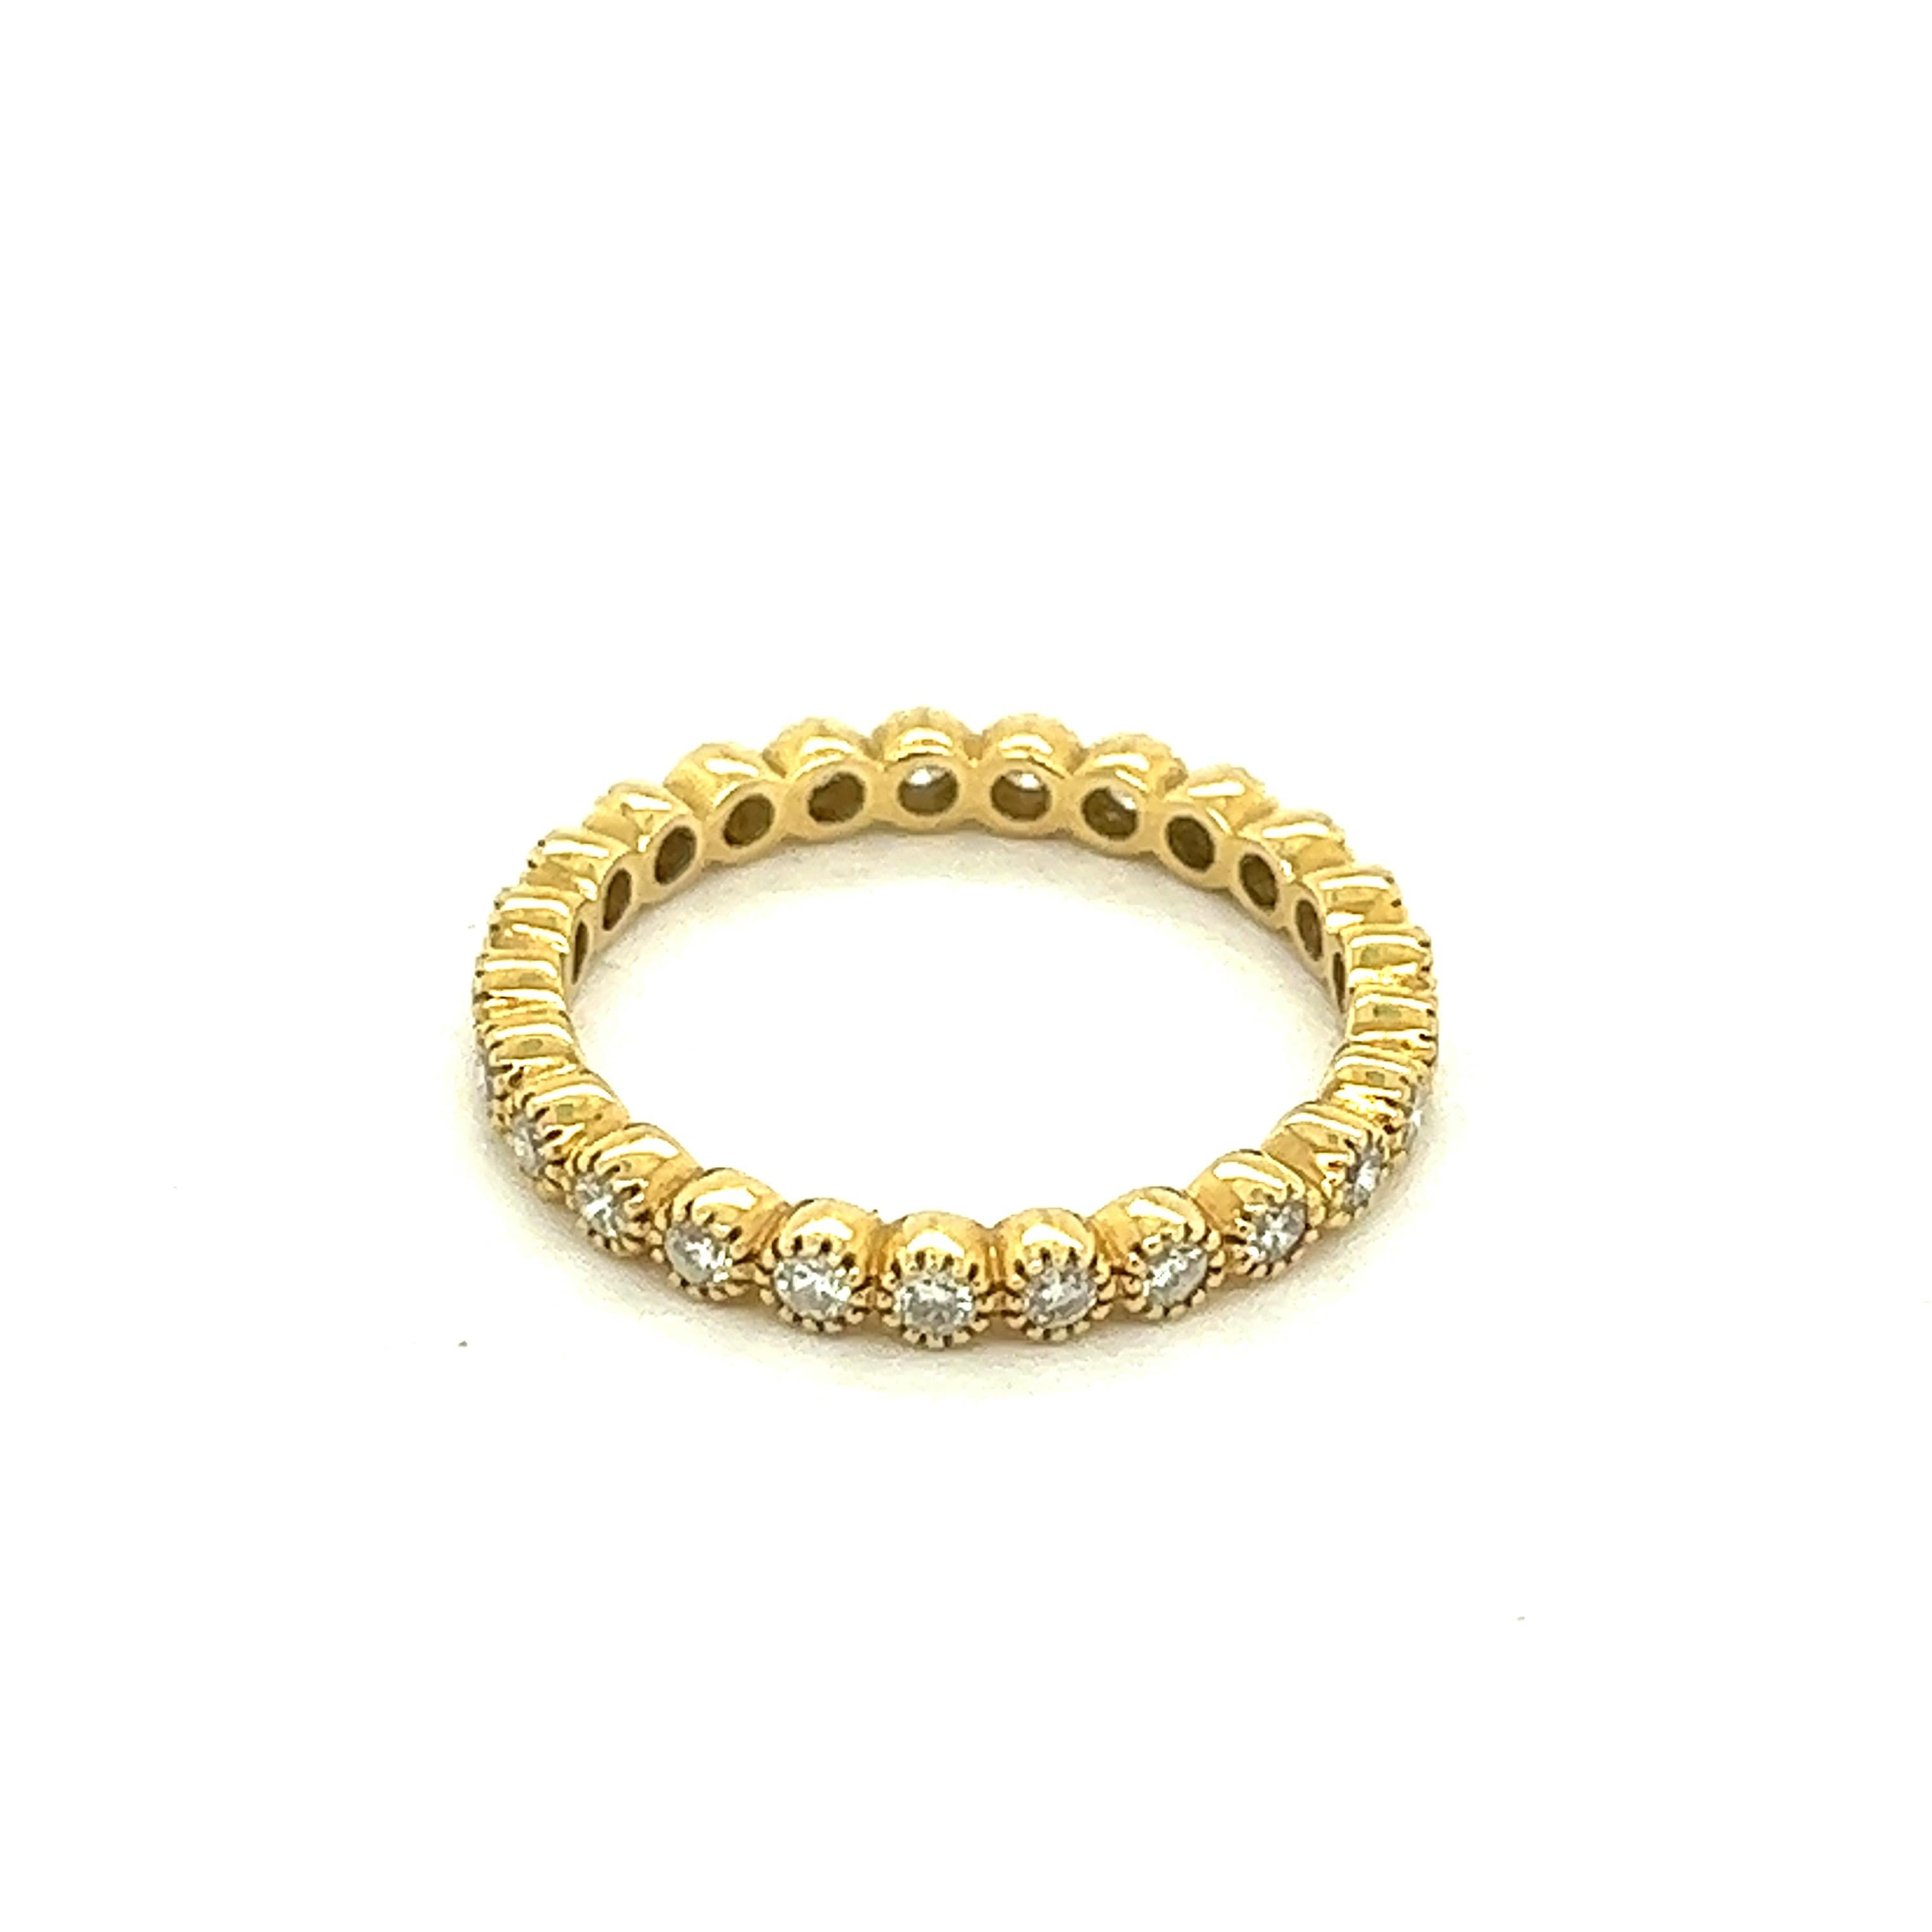 Diamond 18k Yellow Gold Band Ring

Twenty-five round-cut diamonds of approximately 0.75 carats, set on 18 karat yellow gold

Size: 7 US
Total weight: 2.3 grams